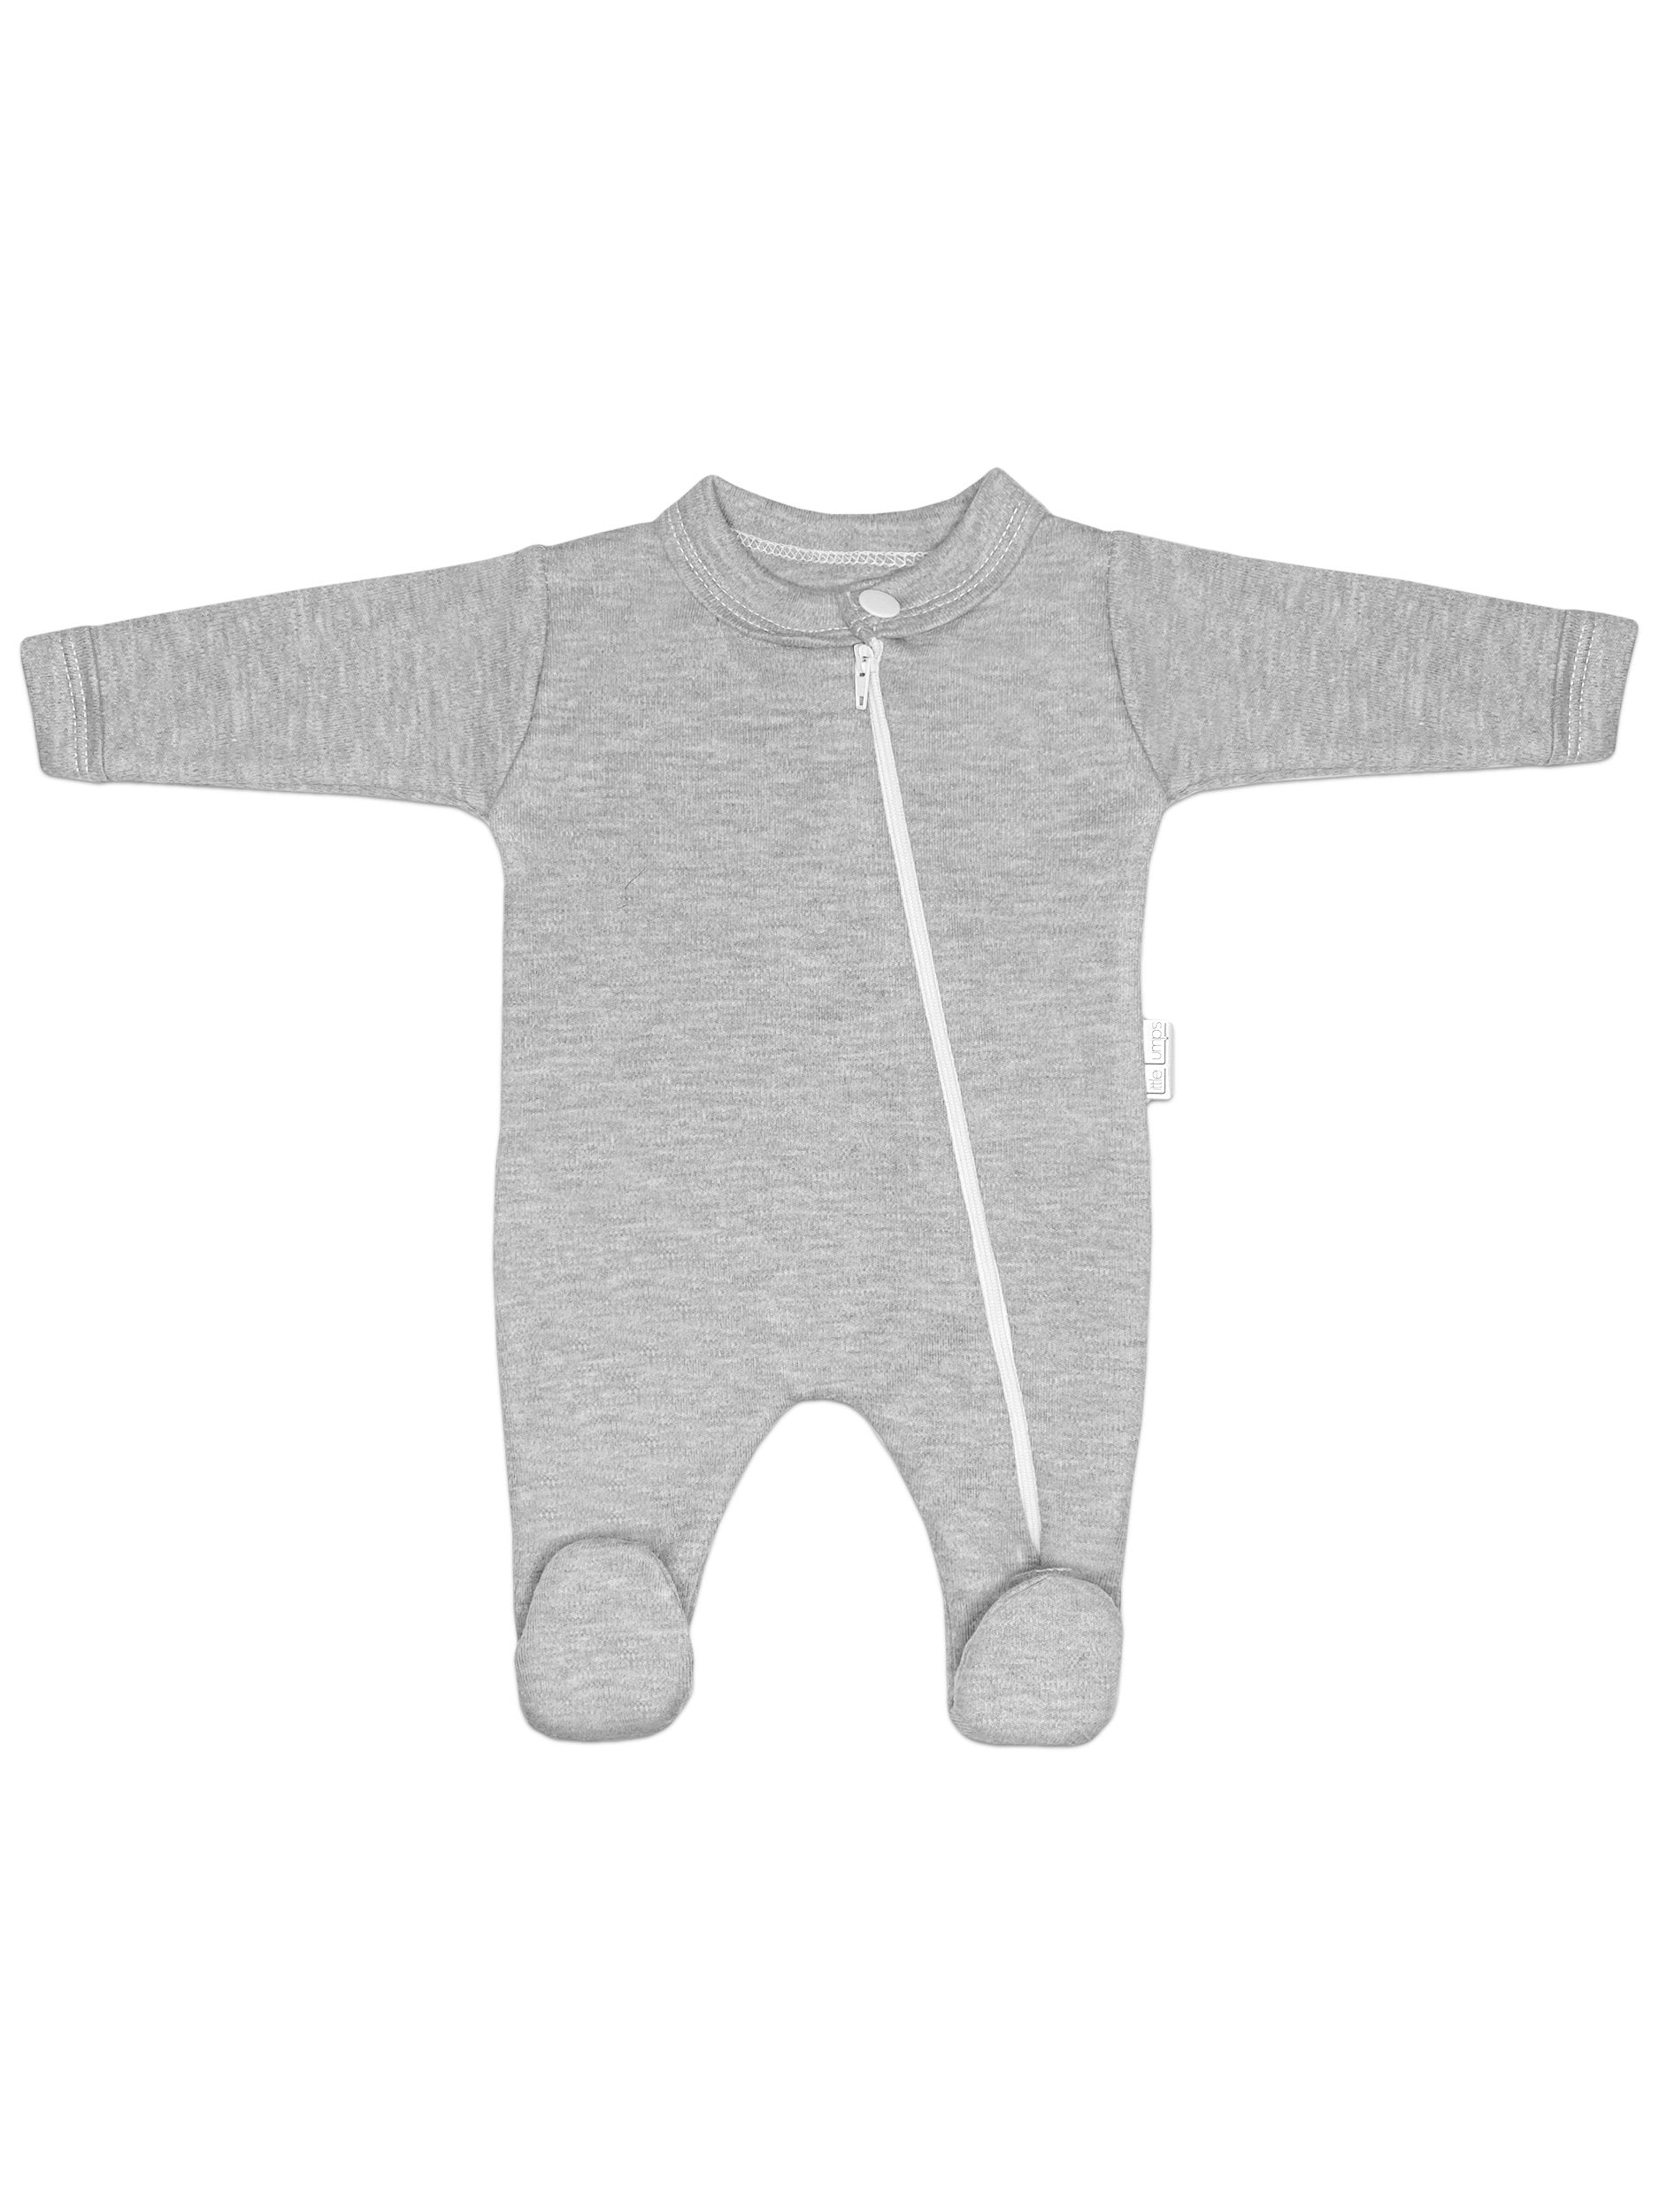 100% Cotton Footed Zip Up Sleepsuit - Grey Sleepsuit / Babygrow Little Lumps 